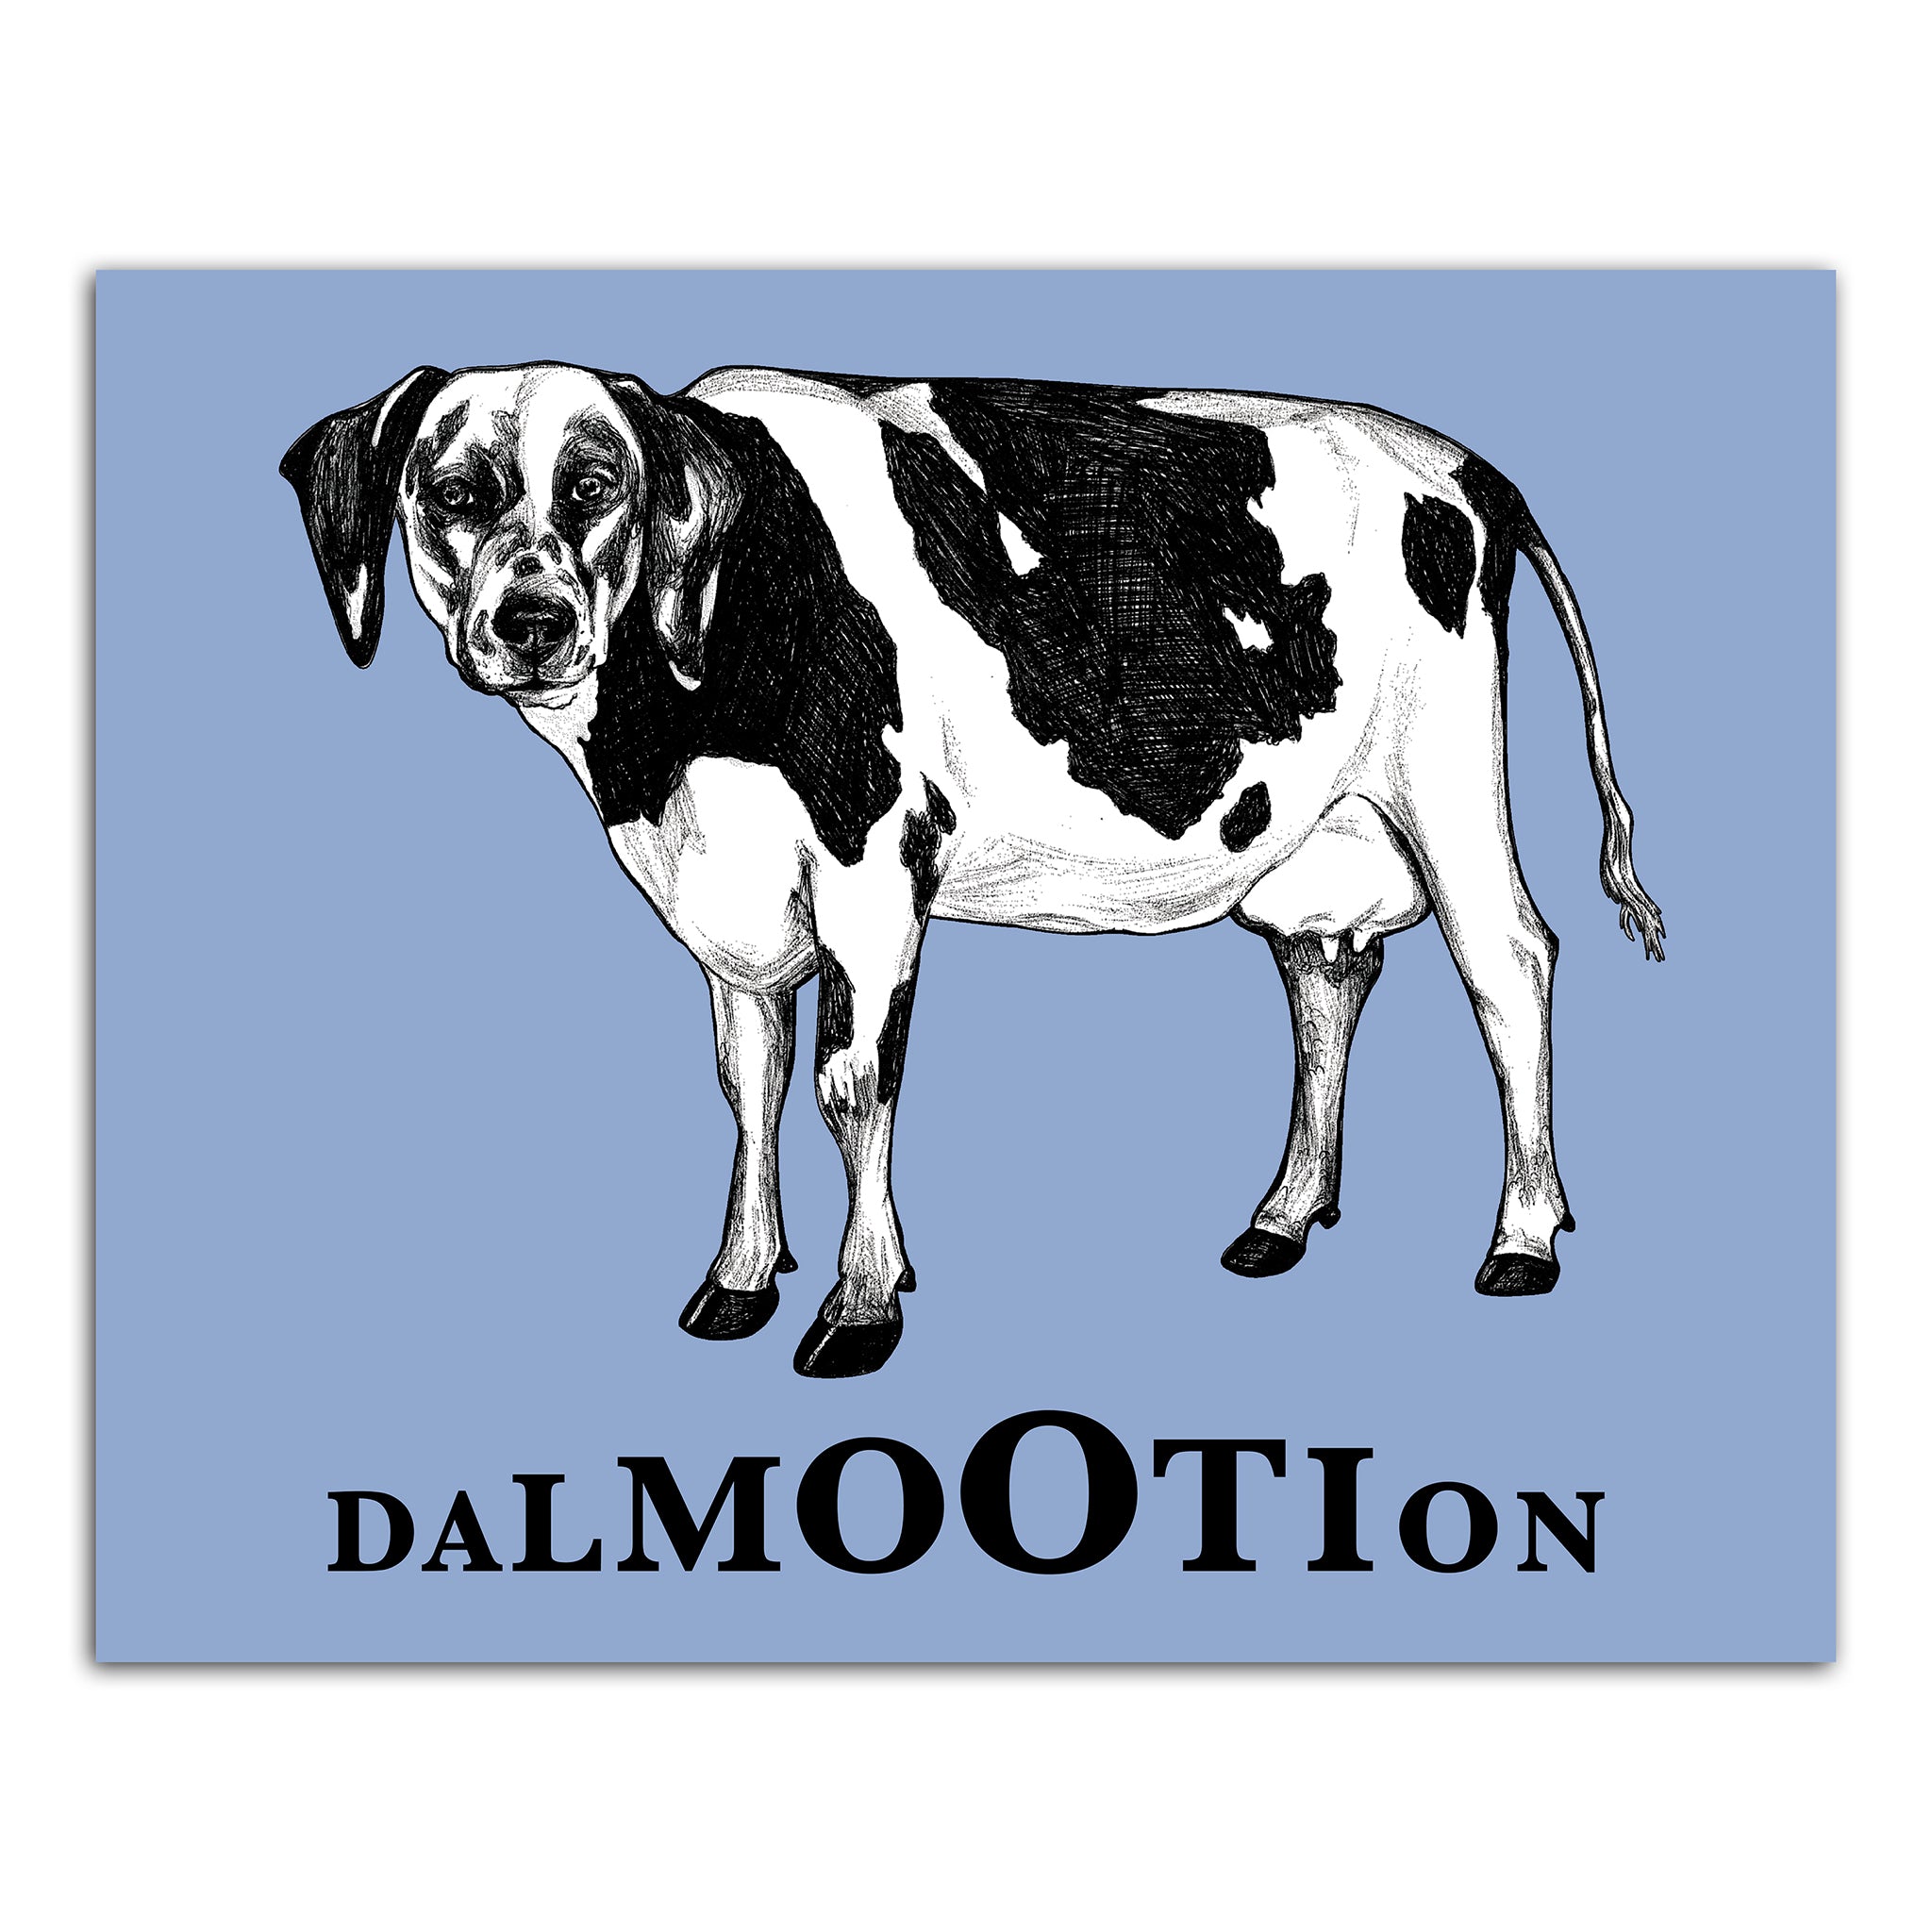 Dalmootion | Dalmatian + Cow Hybrid Animal | 8x10" Color Print